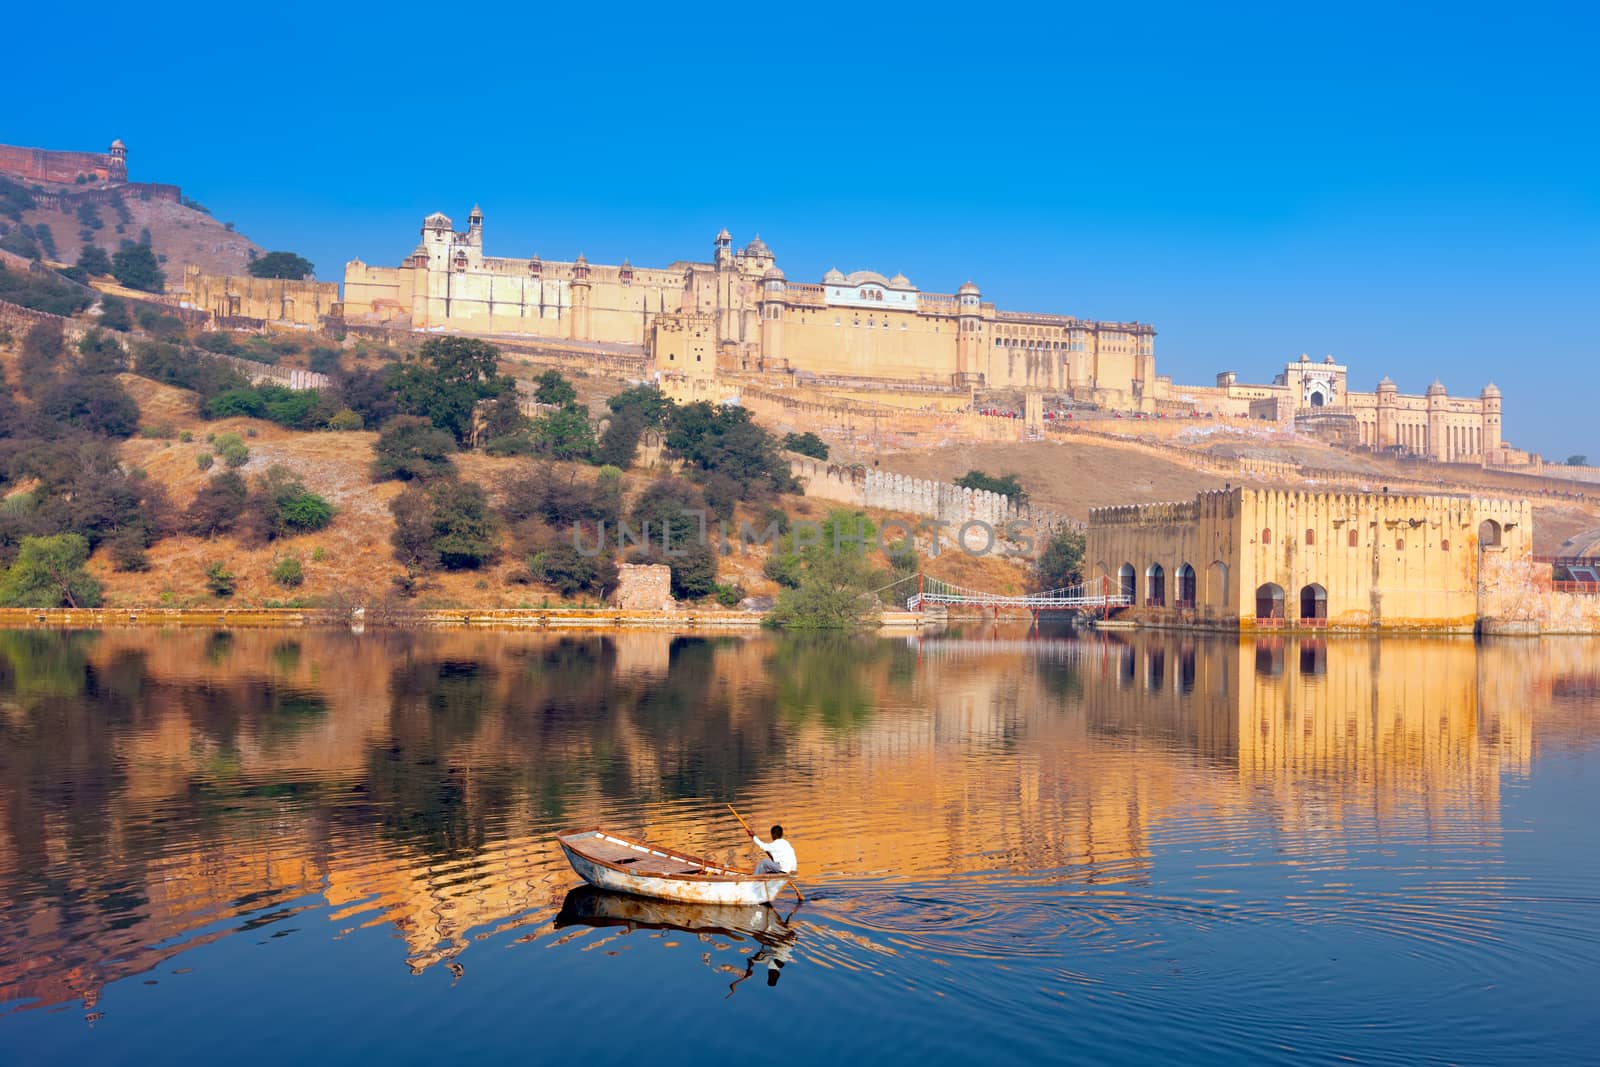 Maota Lake and Amber Fort in Jaipur by vladimir_sklyarov